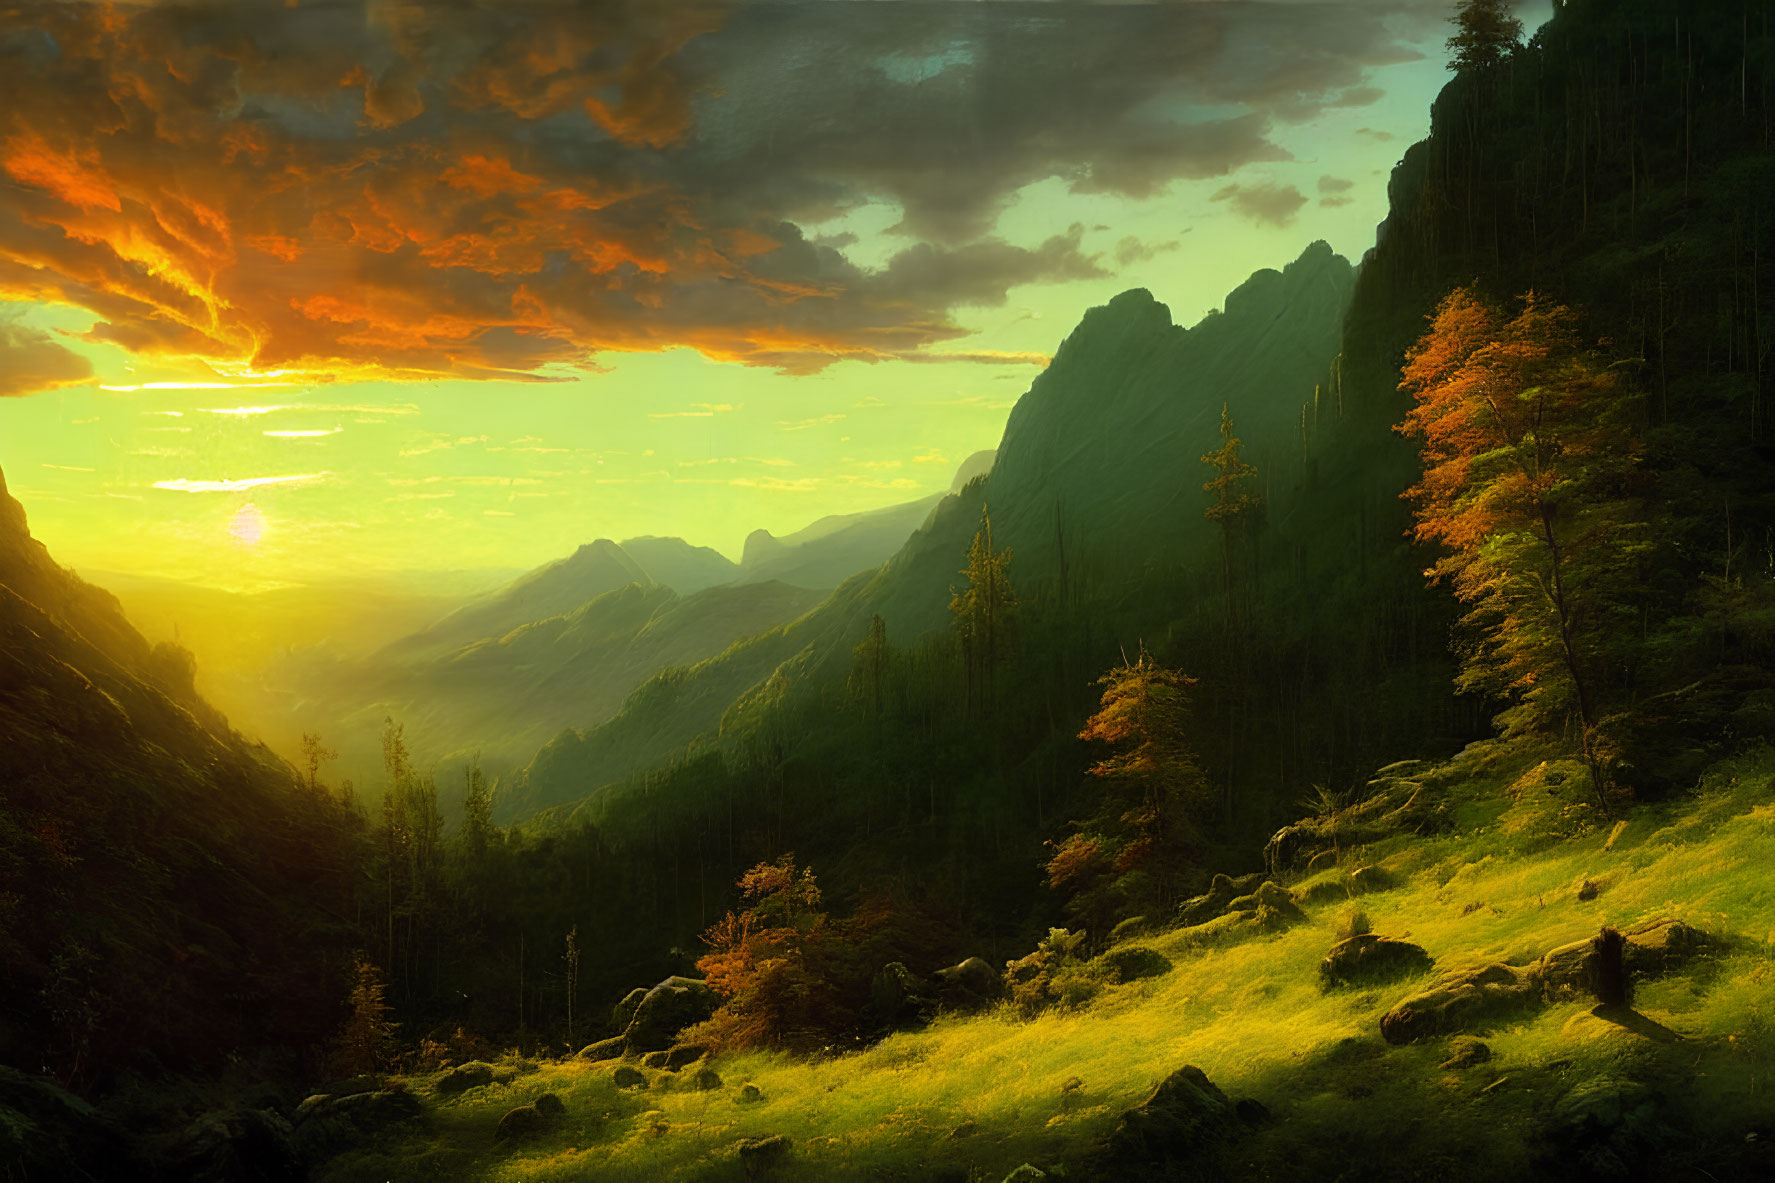 Scenic sunrise over mountain landscape with illuminated foliage